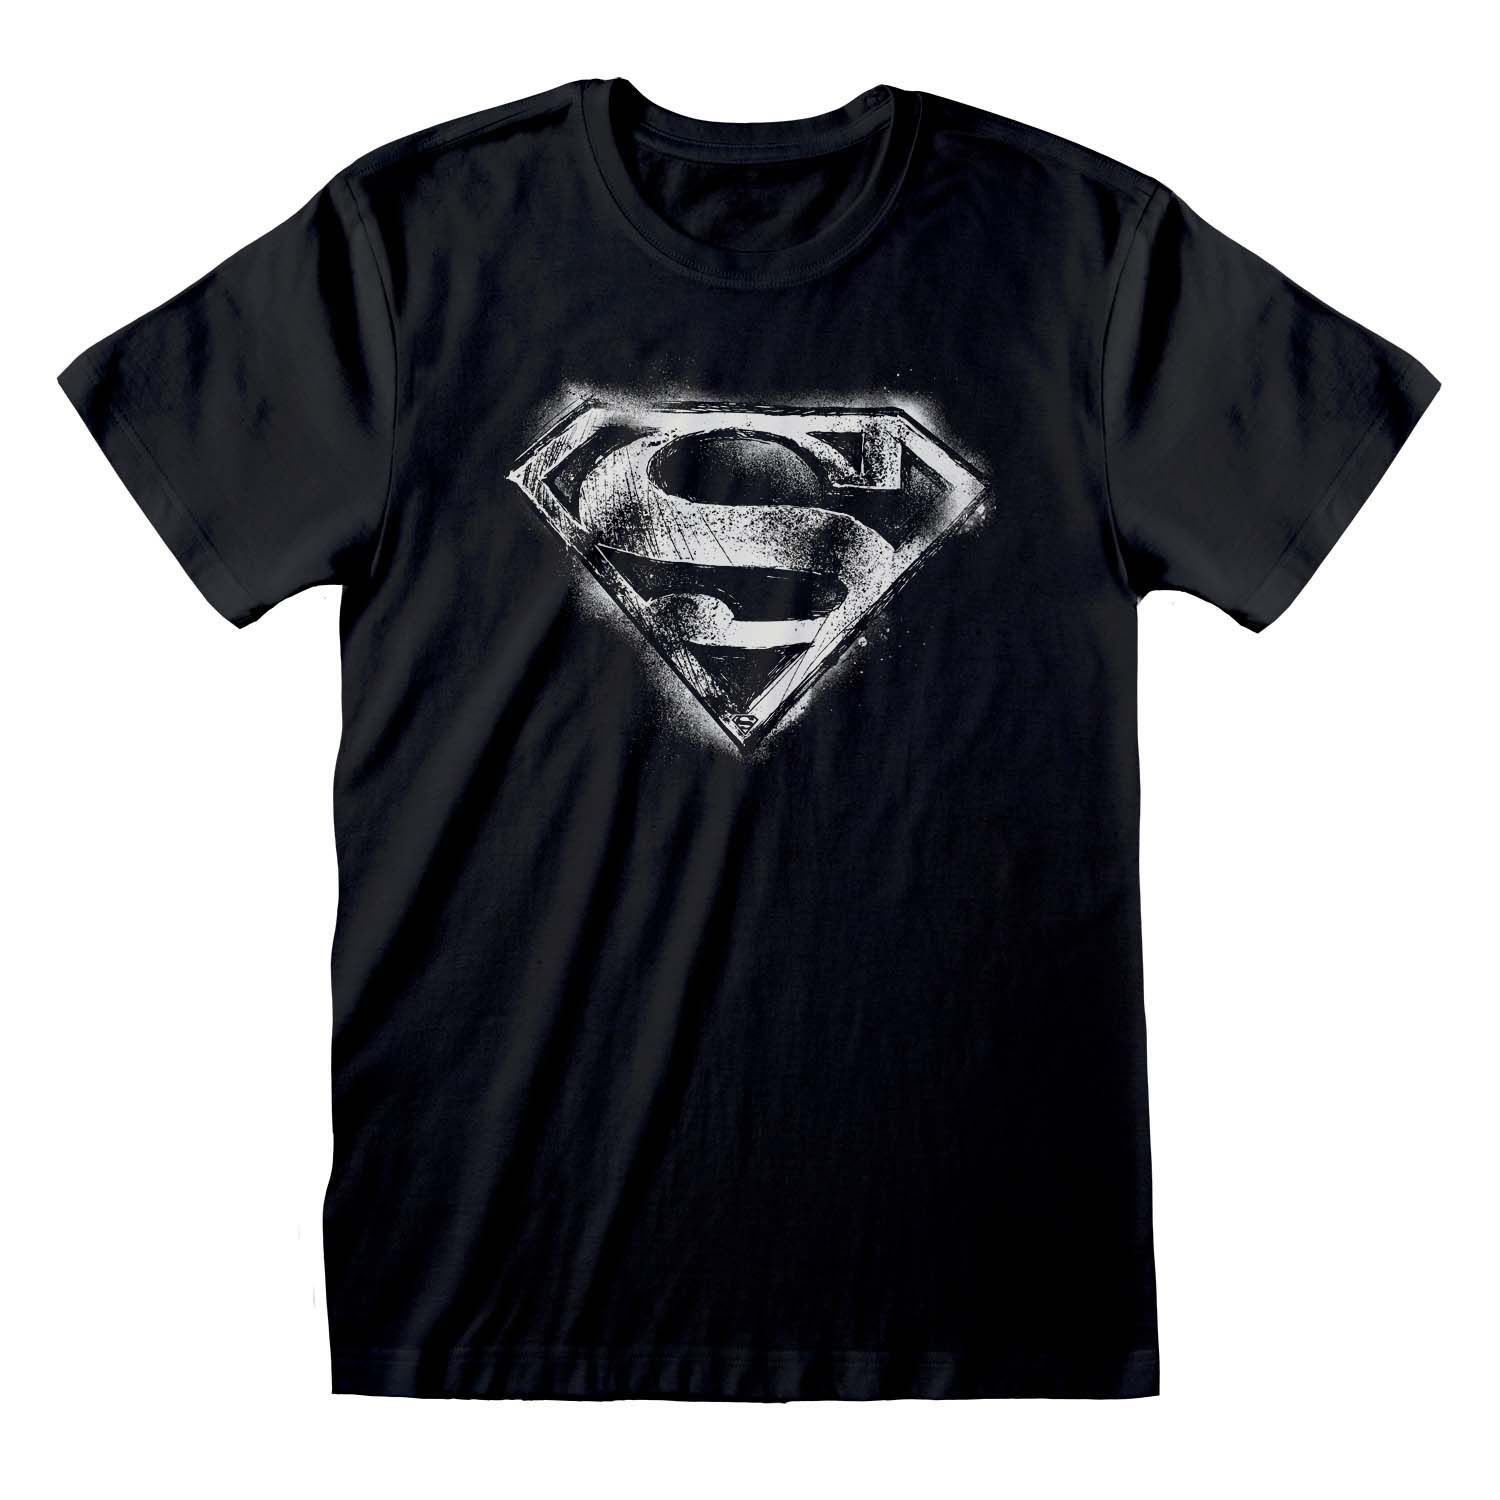 superman logo black and white